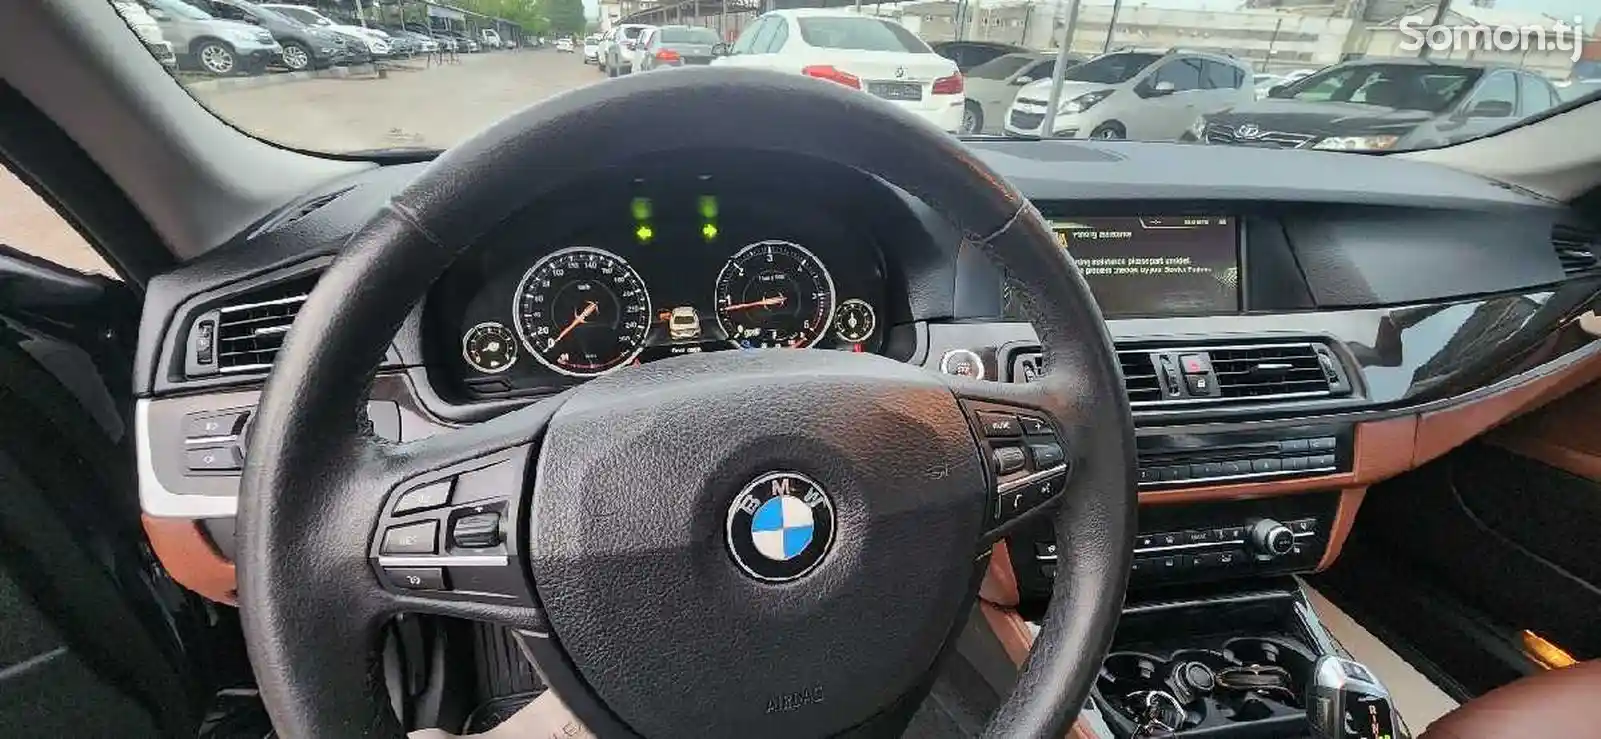 BMW 5 series, 2013-7